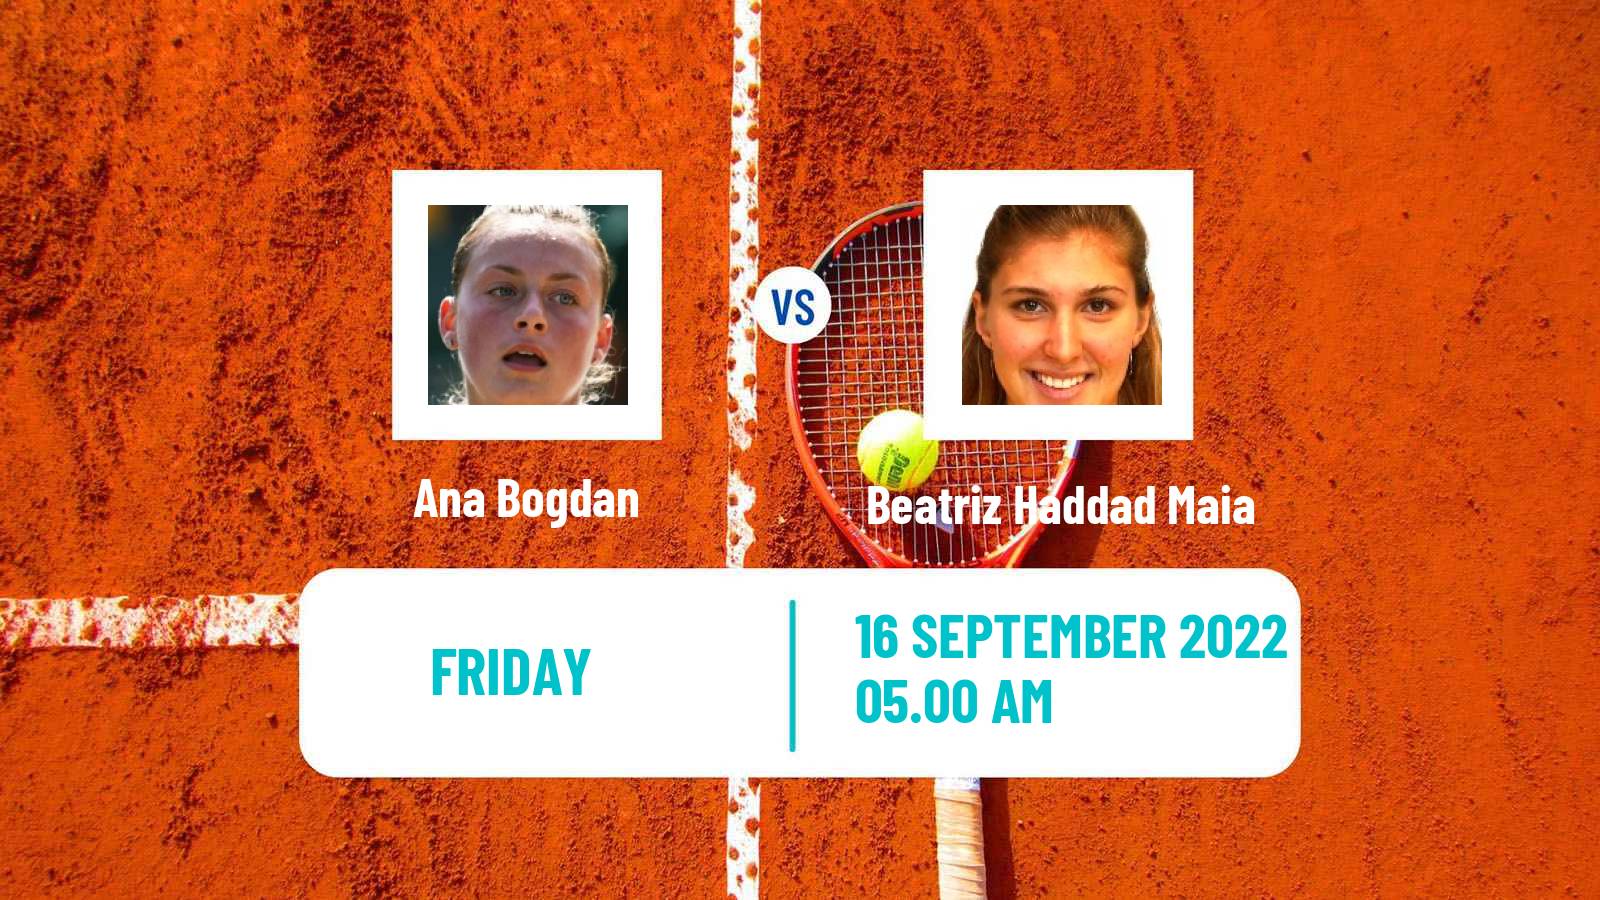 Tennis WTA Portoroz Ana Bogdan - Beatriz Haddad Maia